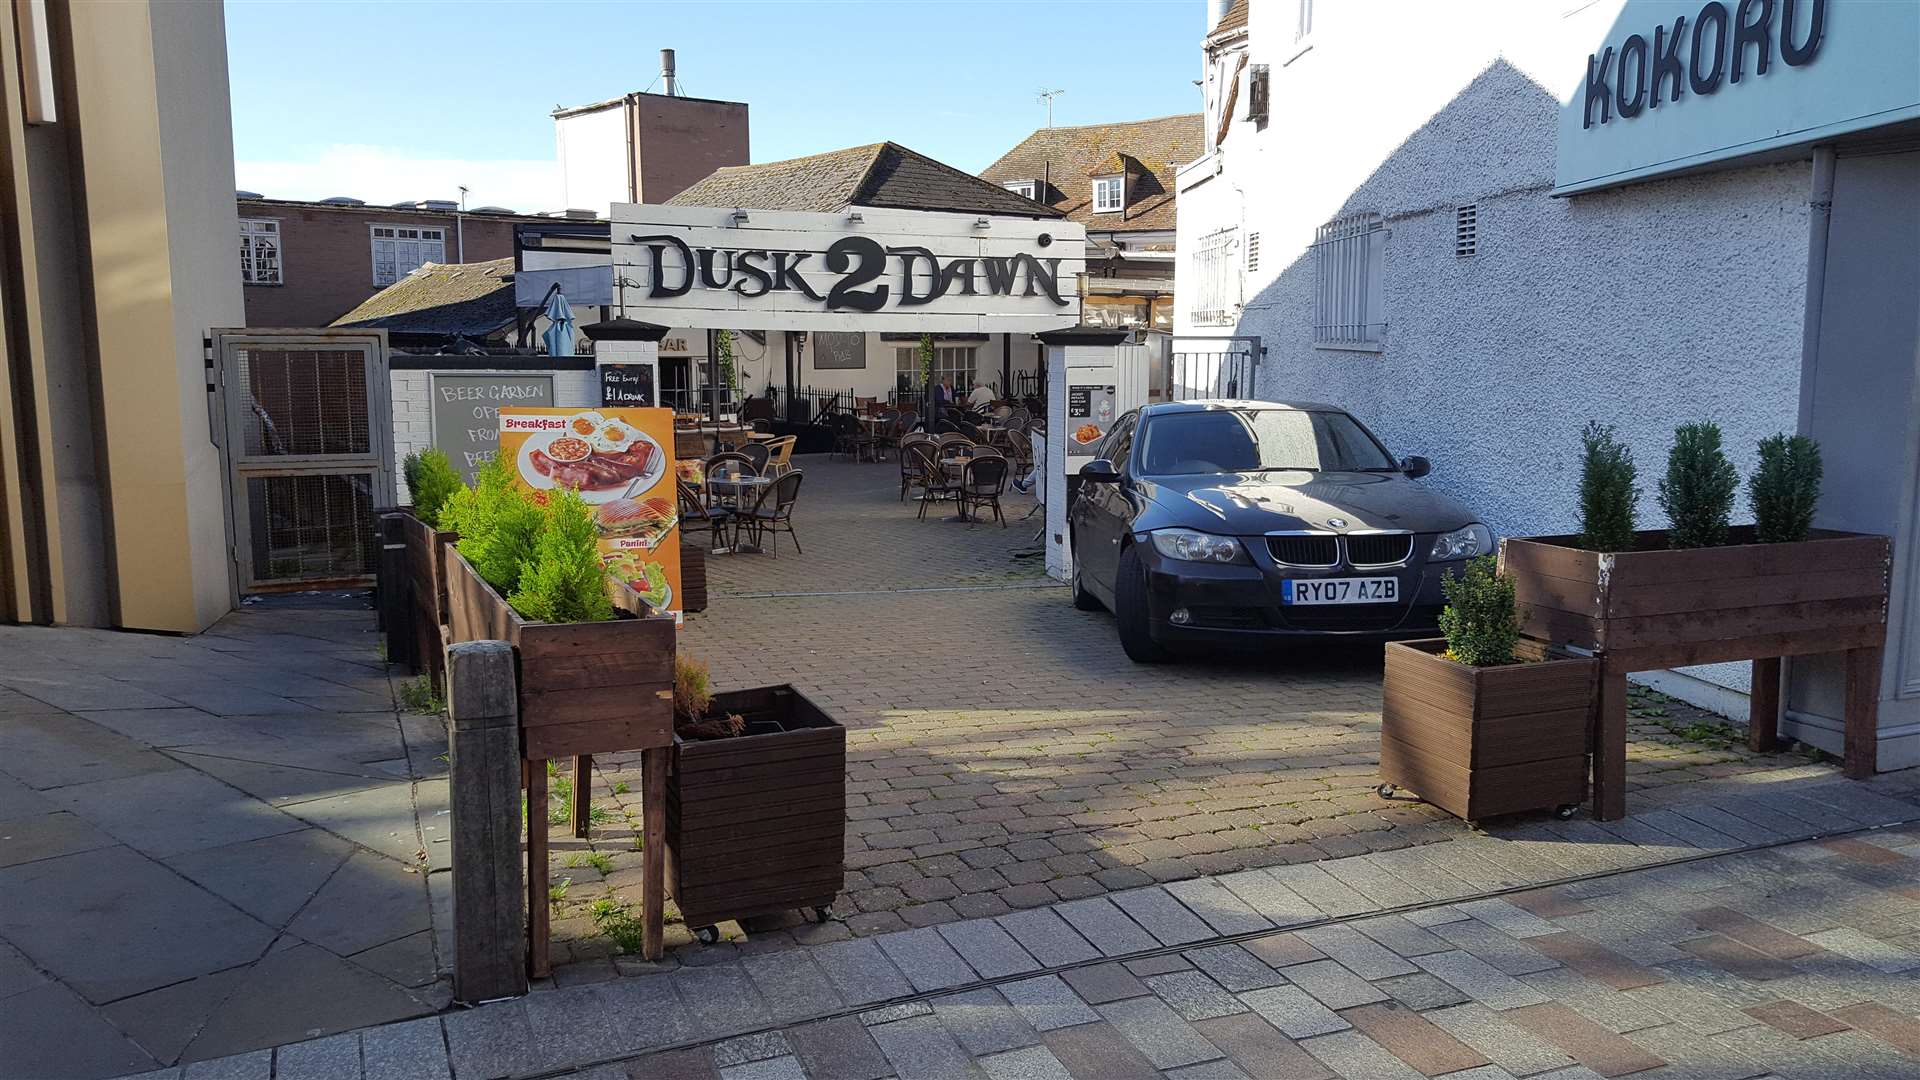 Dusk 2 Dawn in King Street Maidstone